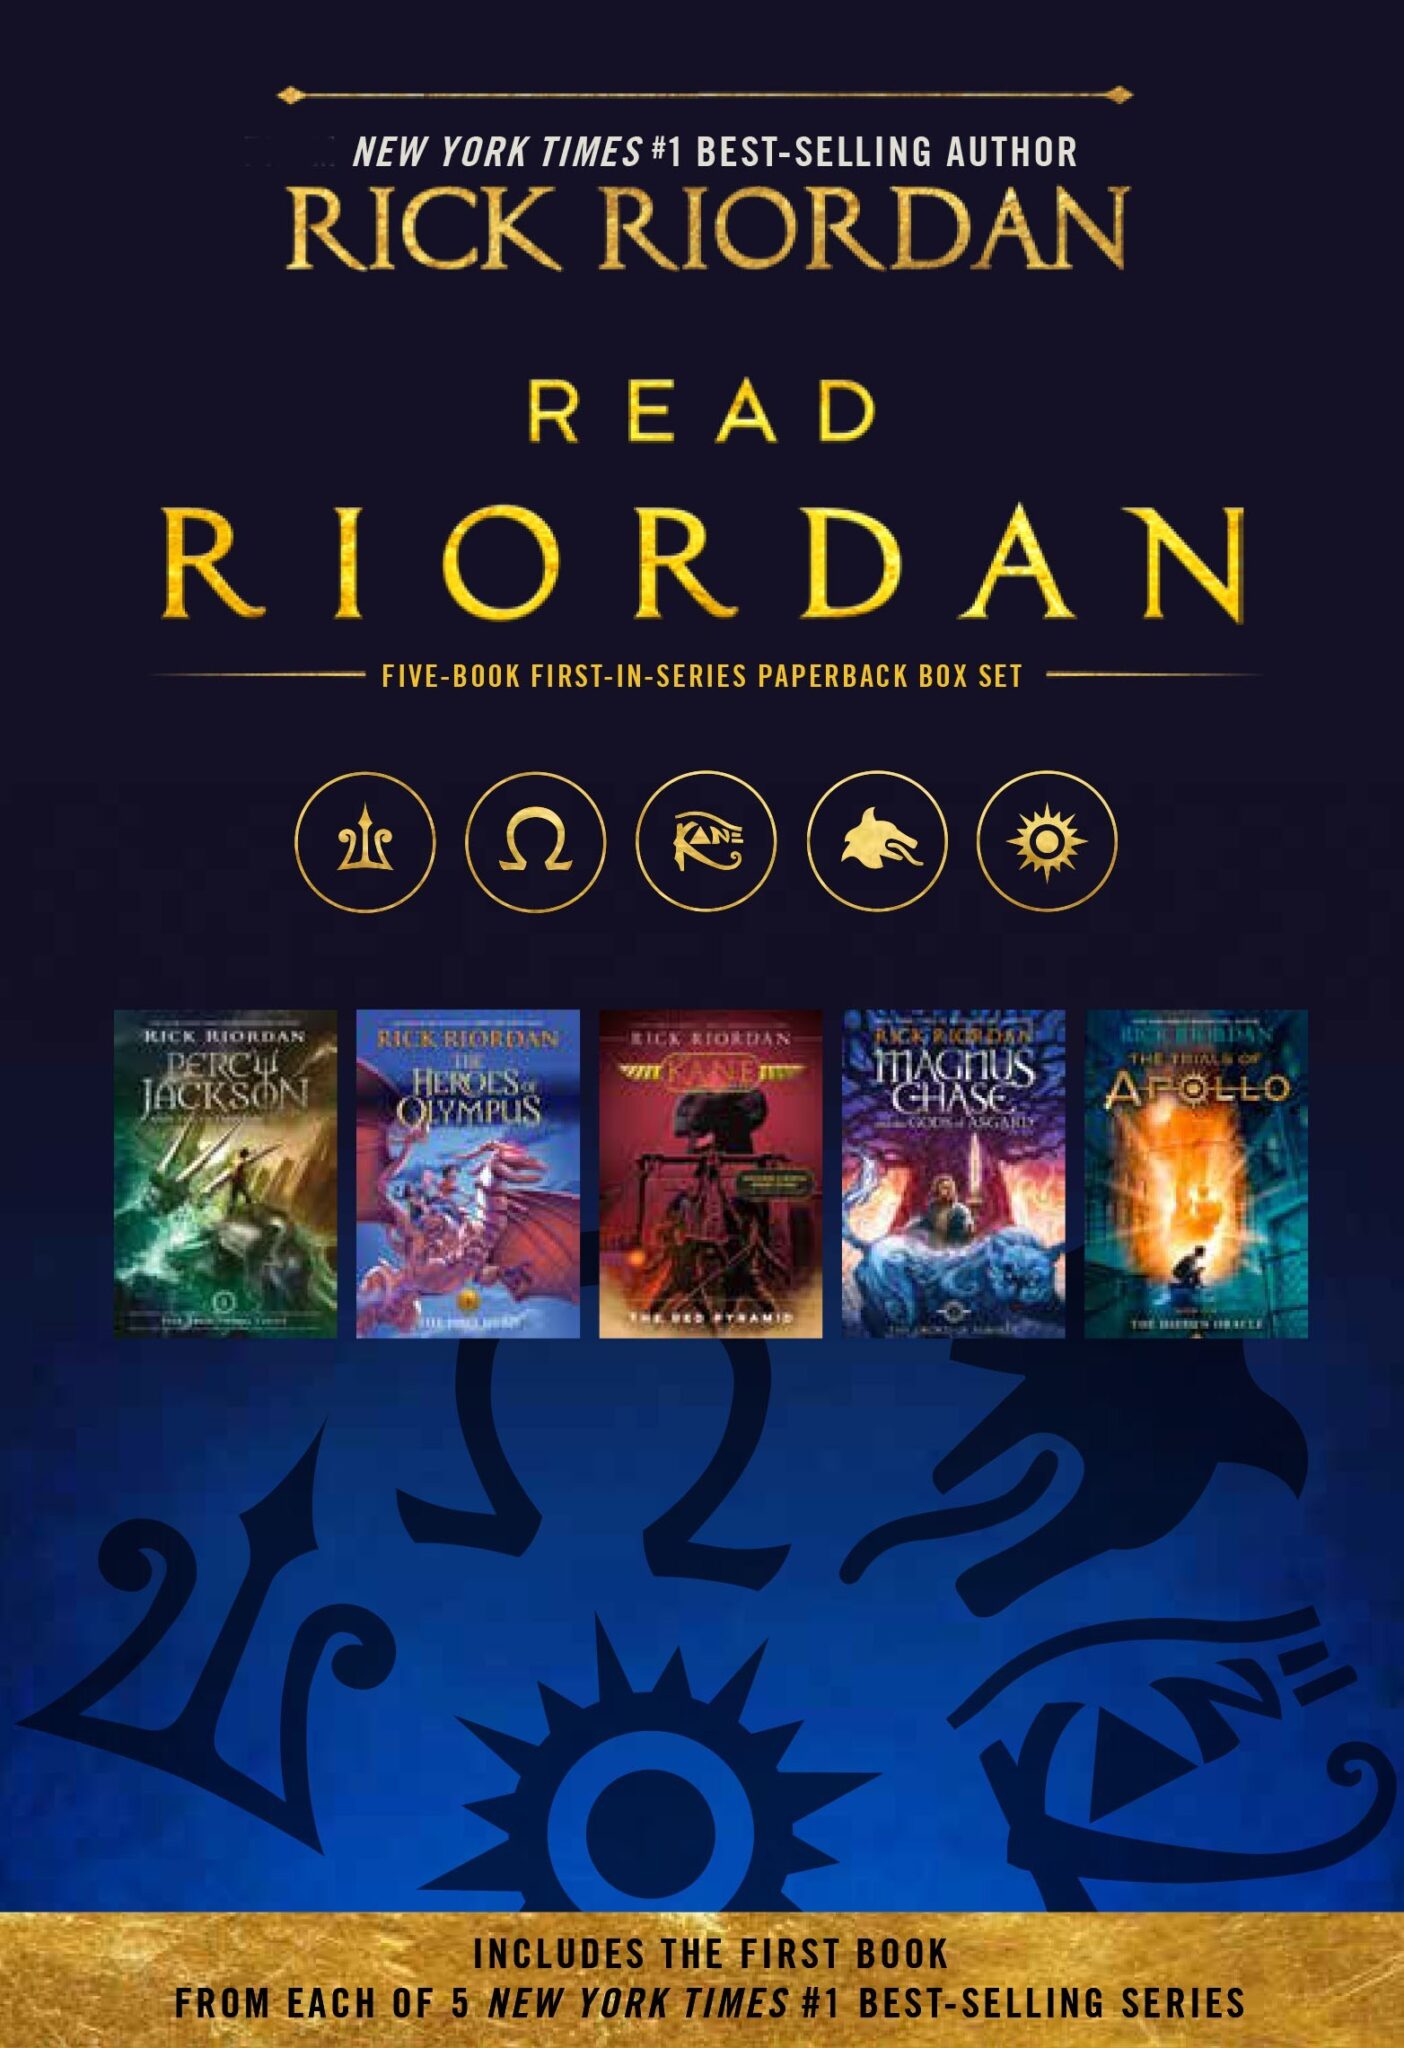 GUIA DEFINITIVA para leer los libros de RICK RIORDAN – Cadabra & Books